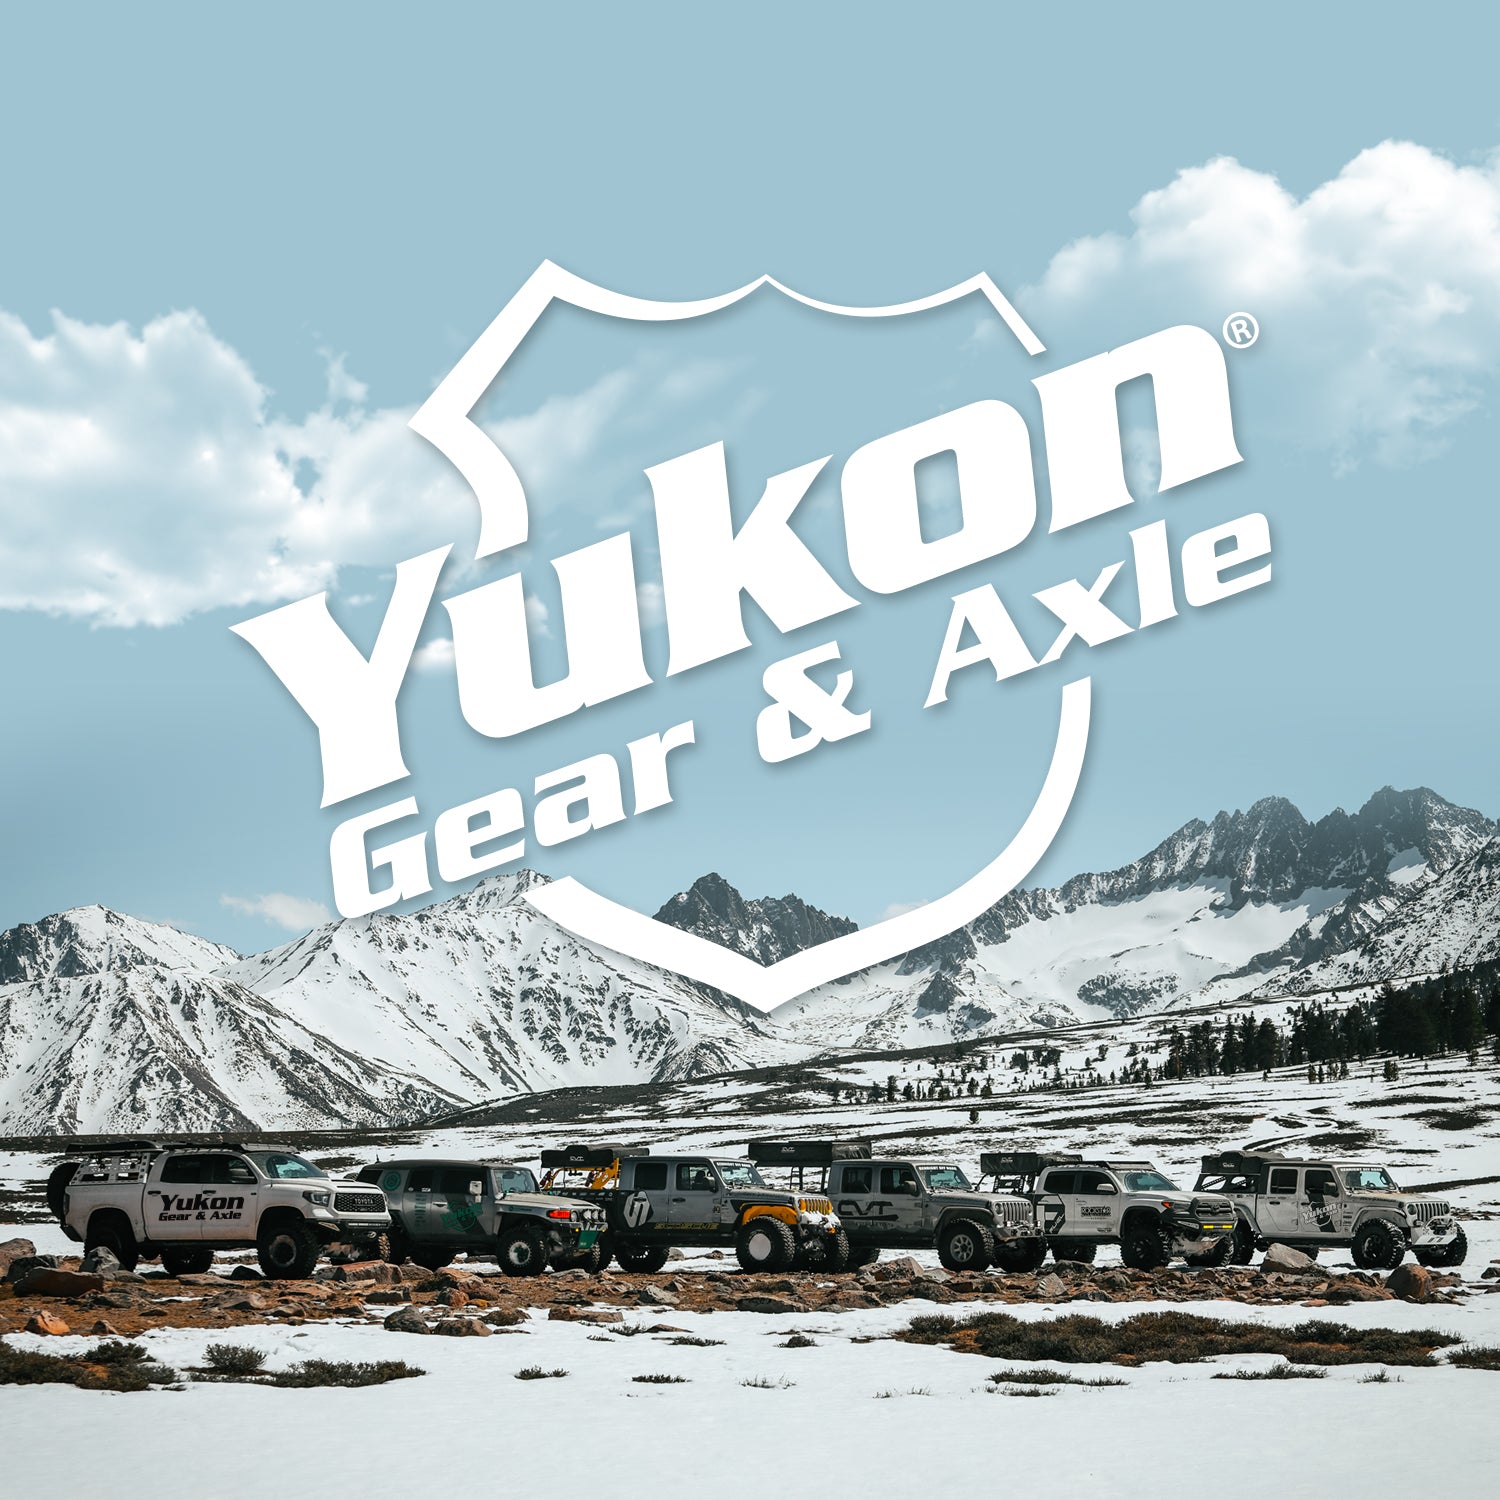 Yukon Gear Drive Axle Shaft Stud YSPSTUD-023